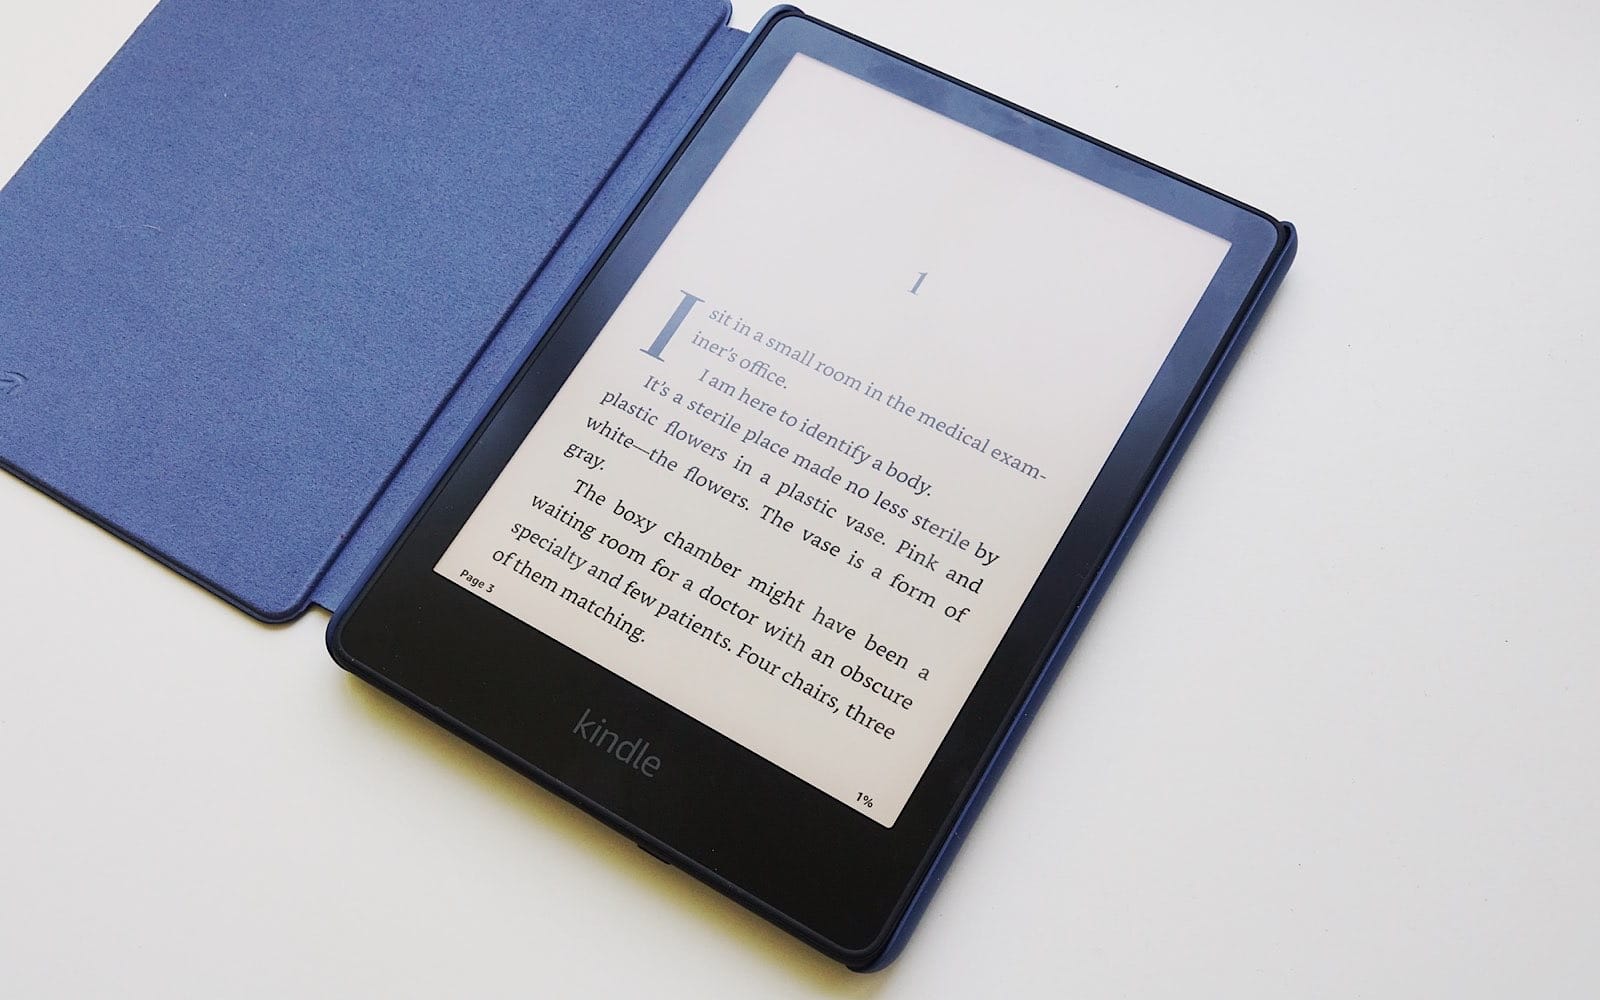 Amazon Kindle Paperwhite Signature Edition in a case